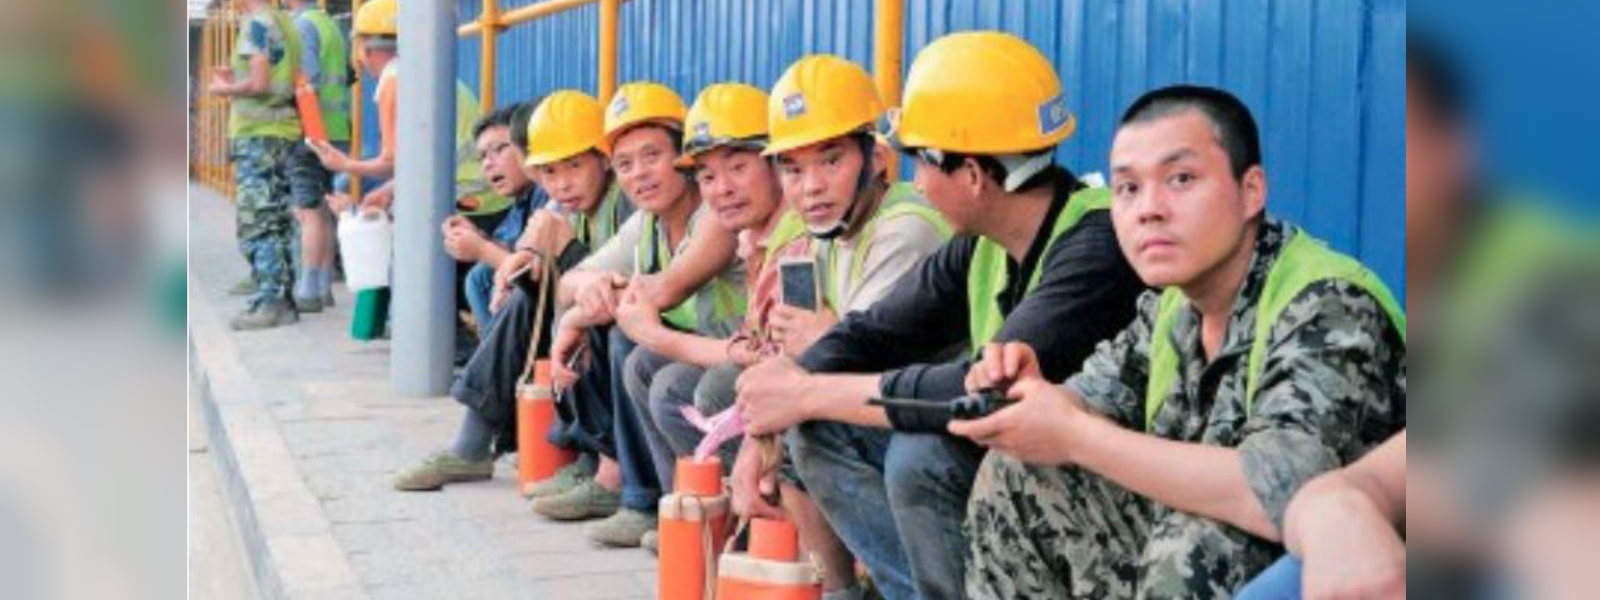 Chinese workers to be examined for Coronavirus